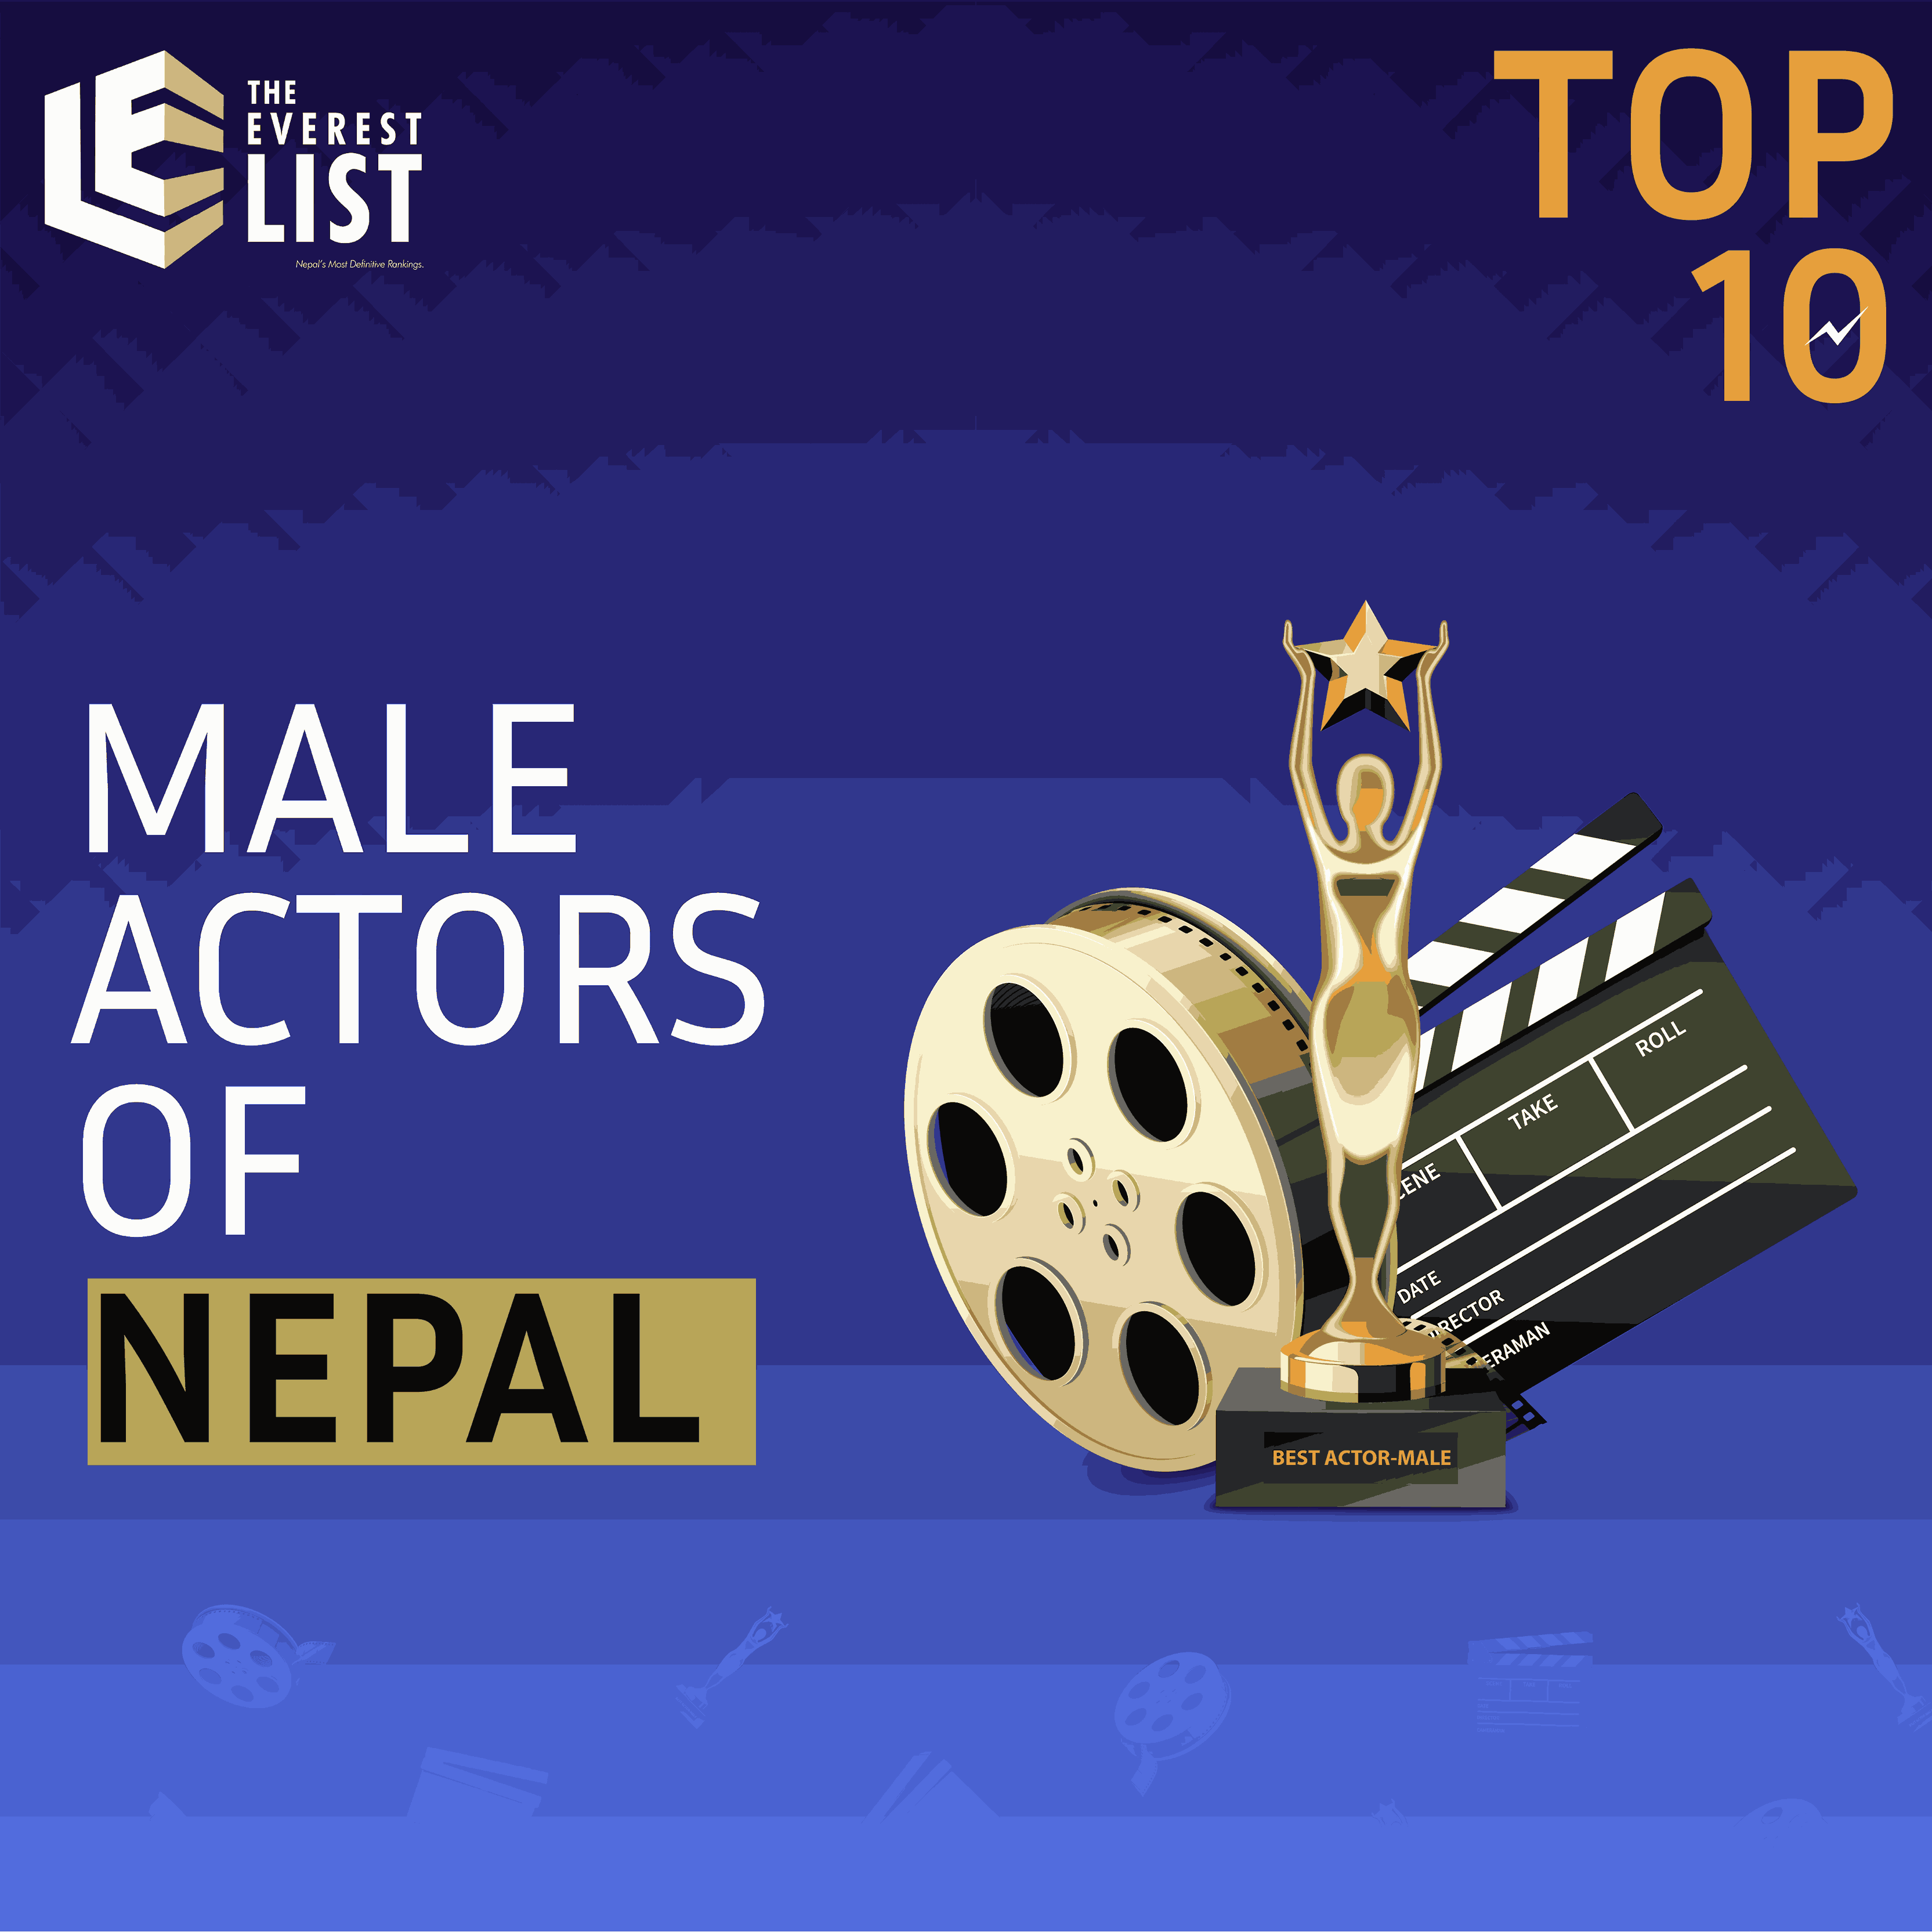 Top 10 Male Actors of Nepal